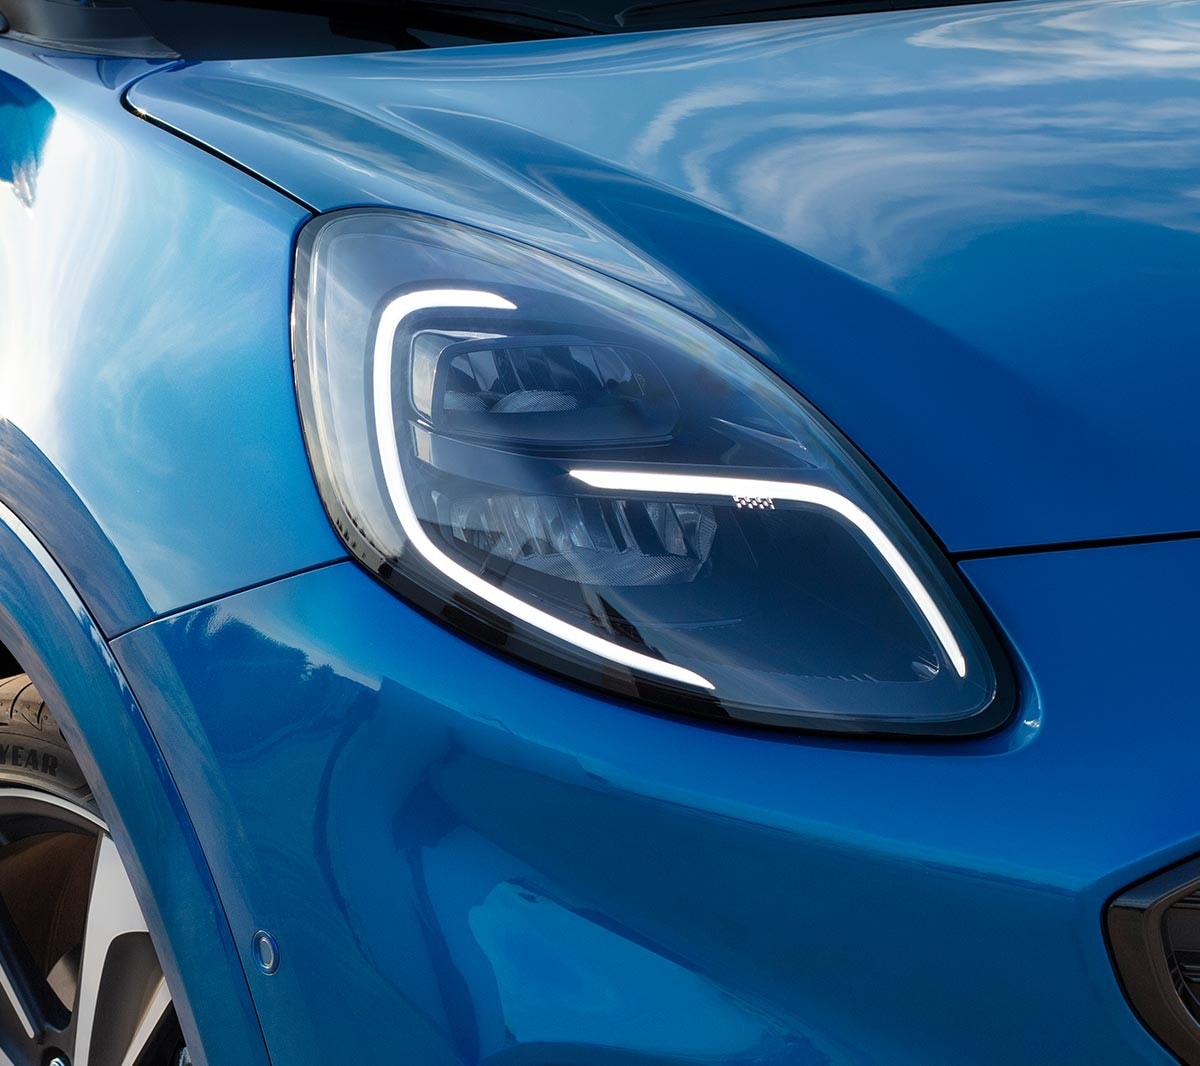 New blue Ford Puma close up on headlights